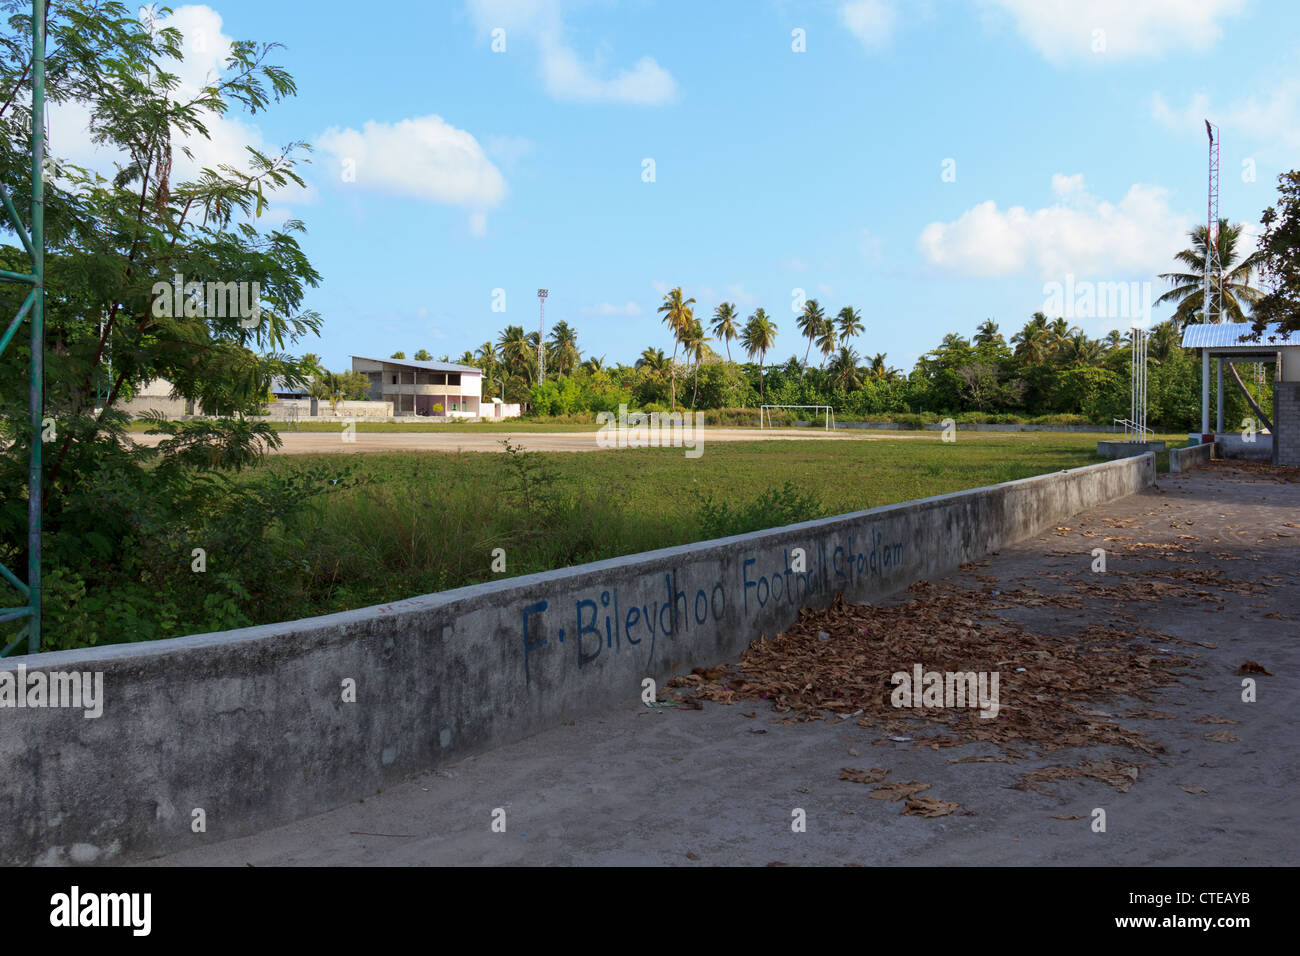 Bilehdhoo island football stadium in the Maldives on a lovely sunny day. Stock Photo